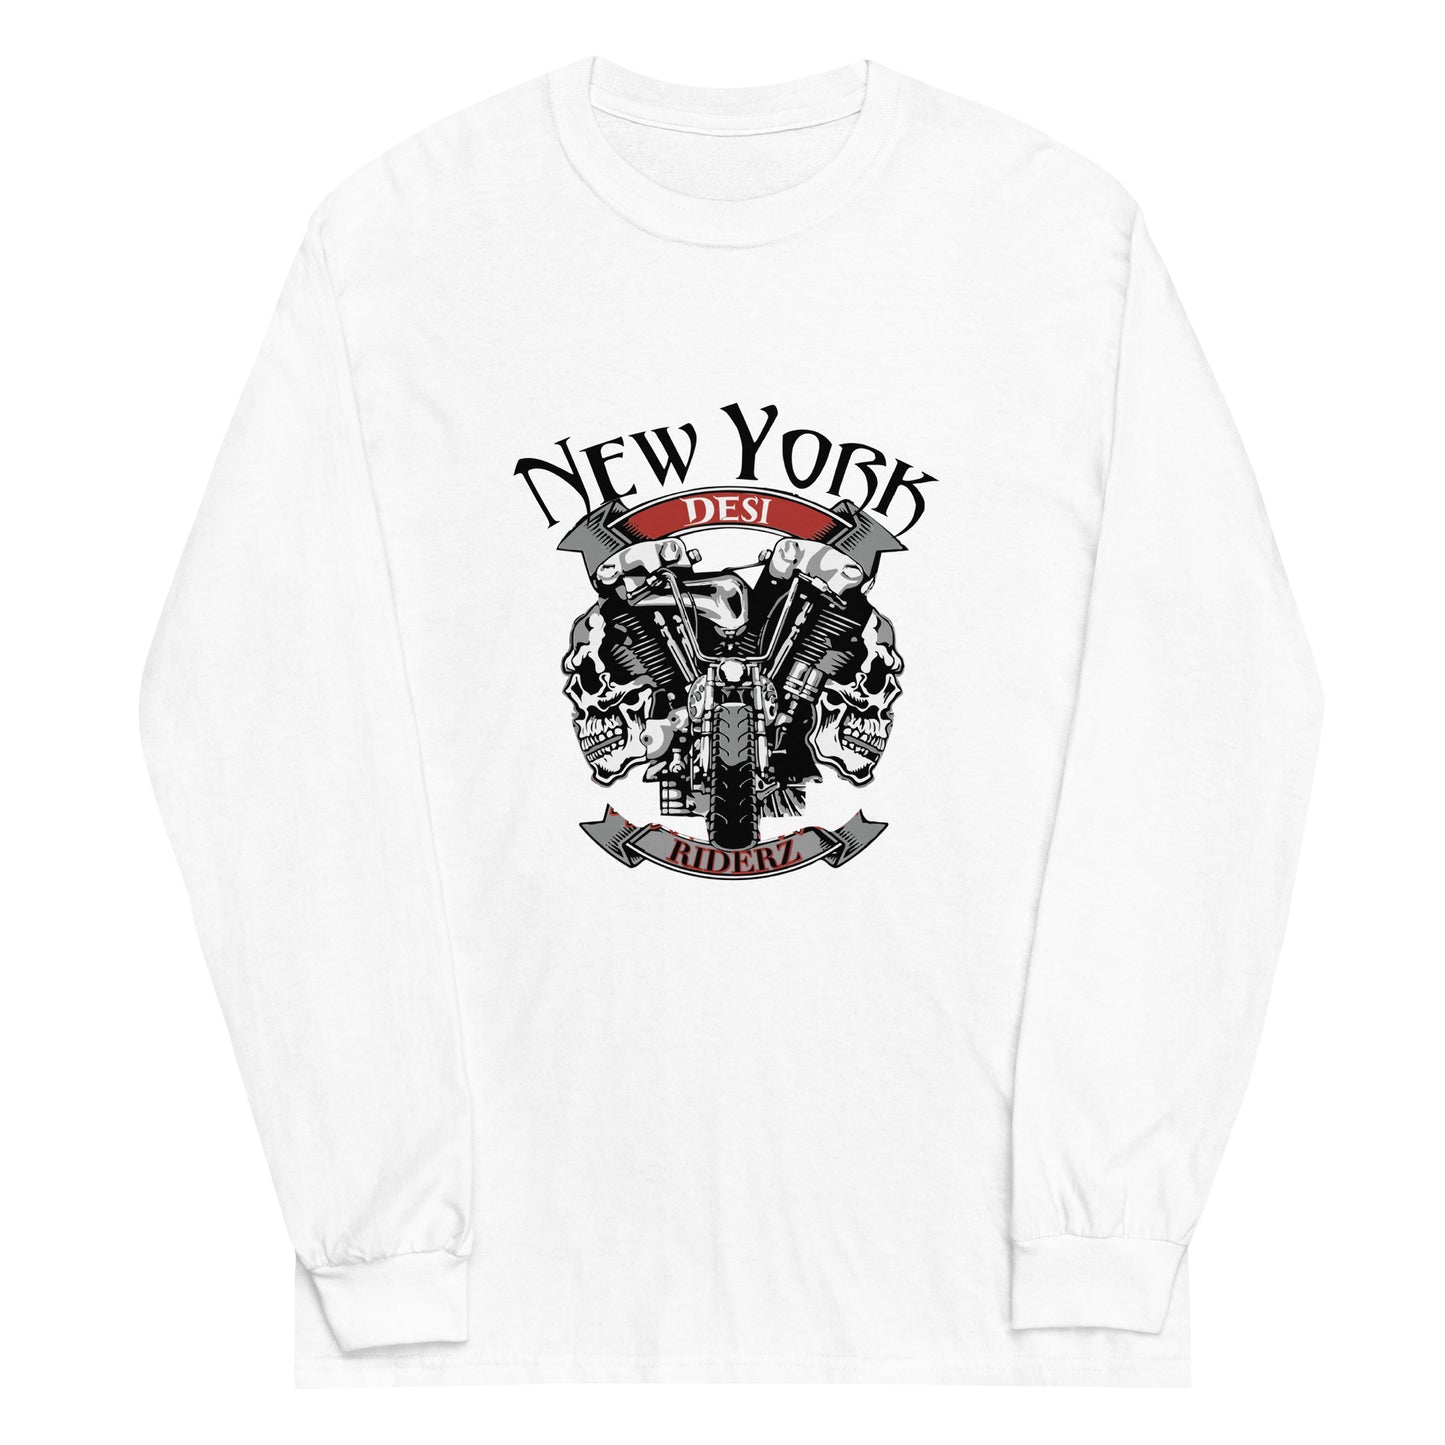 NY Desi Riderz - Men’s Long Sleeve Shirt